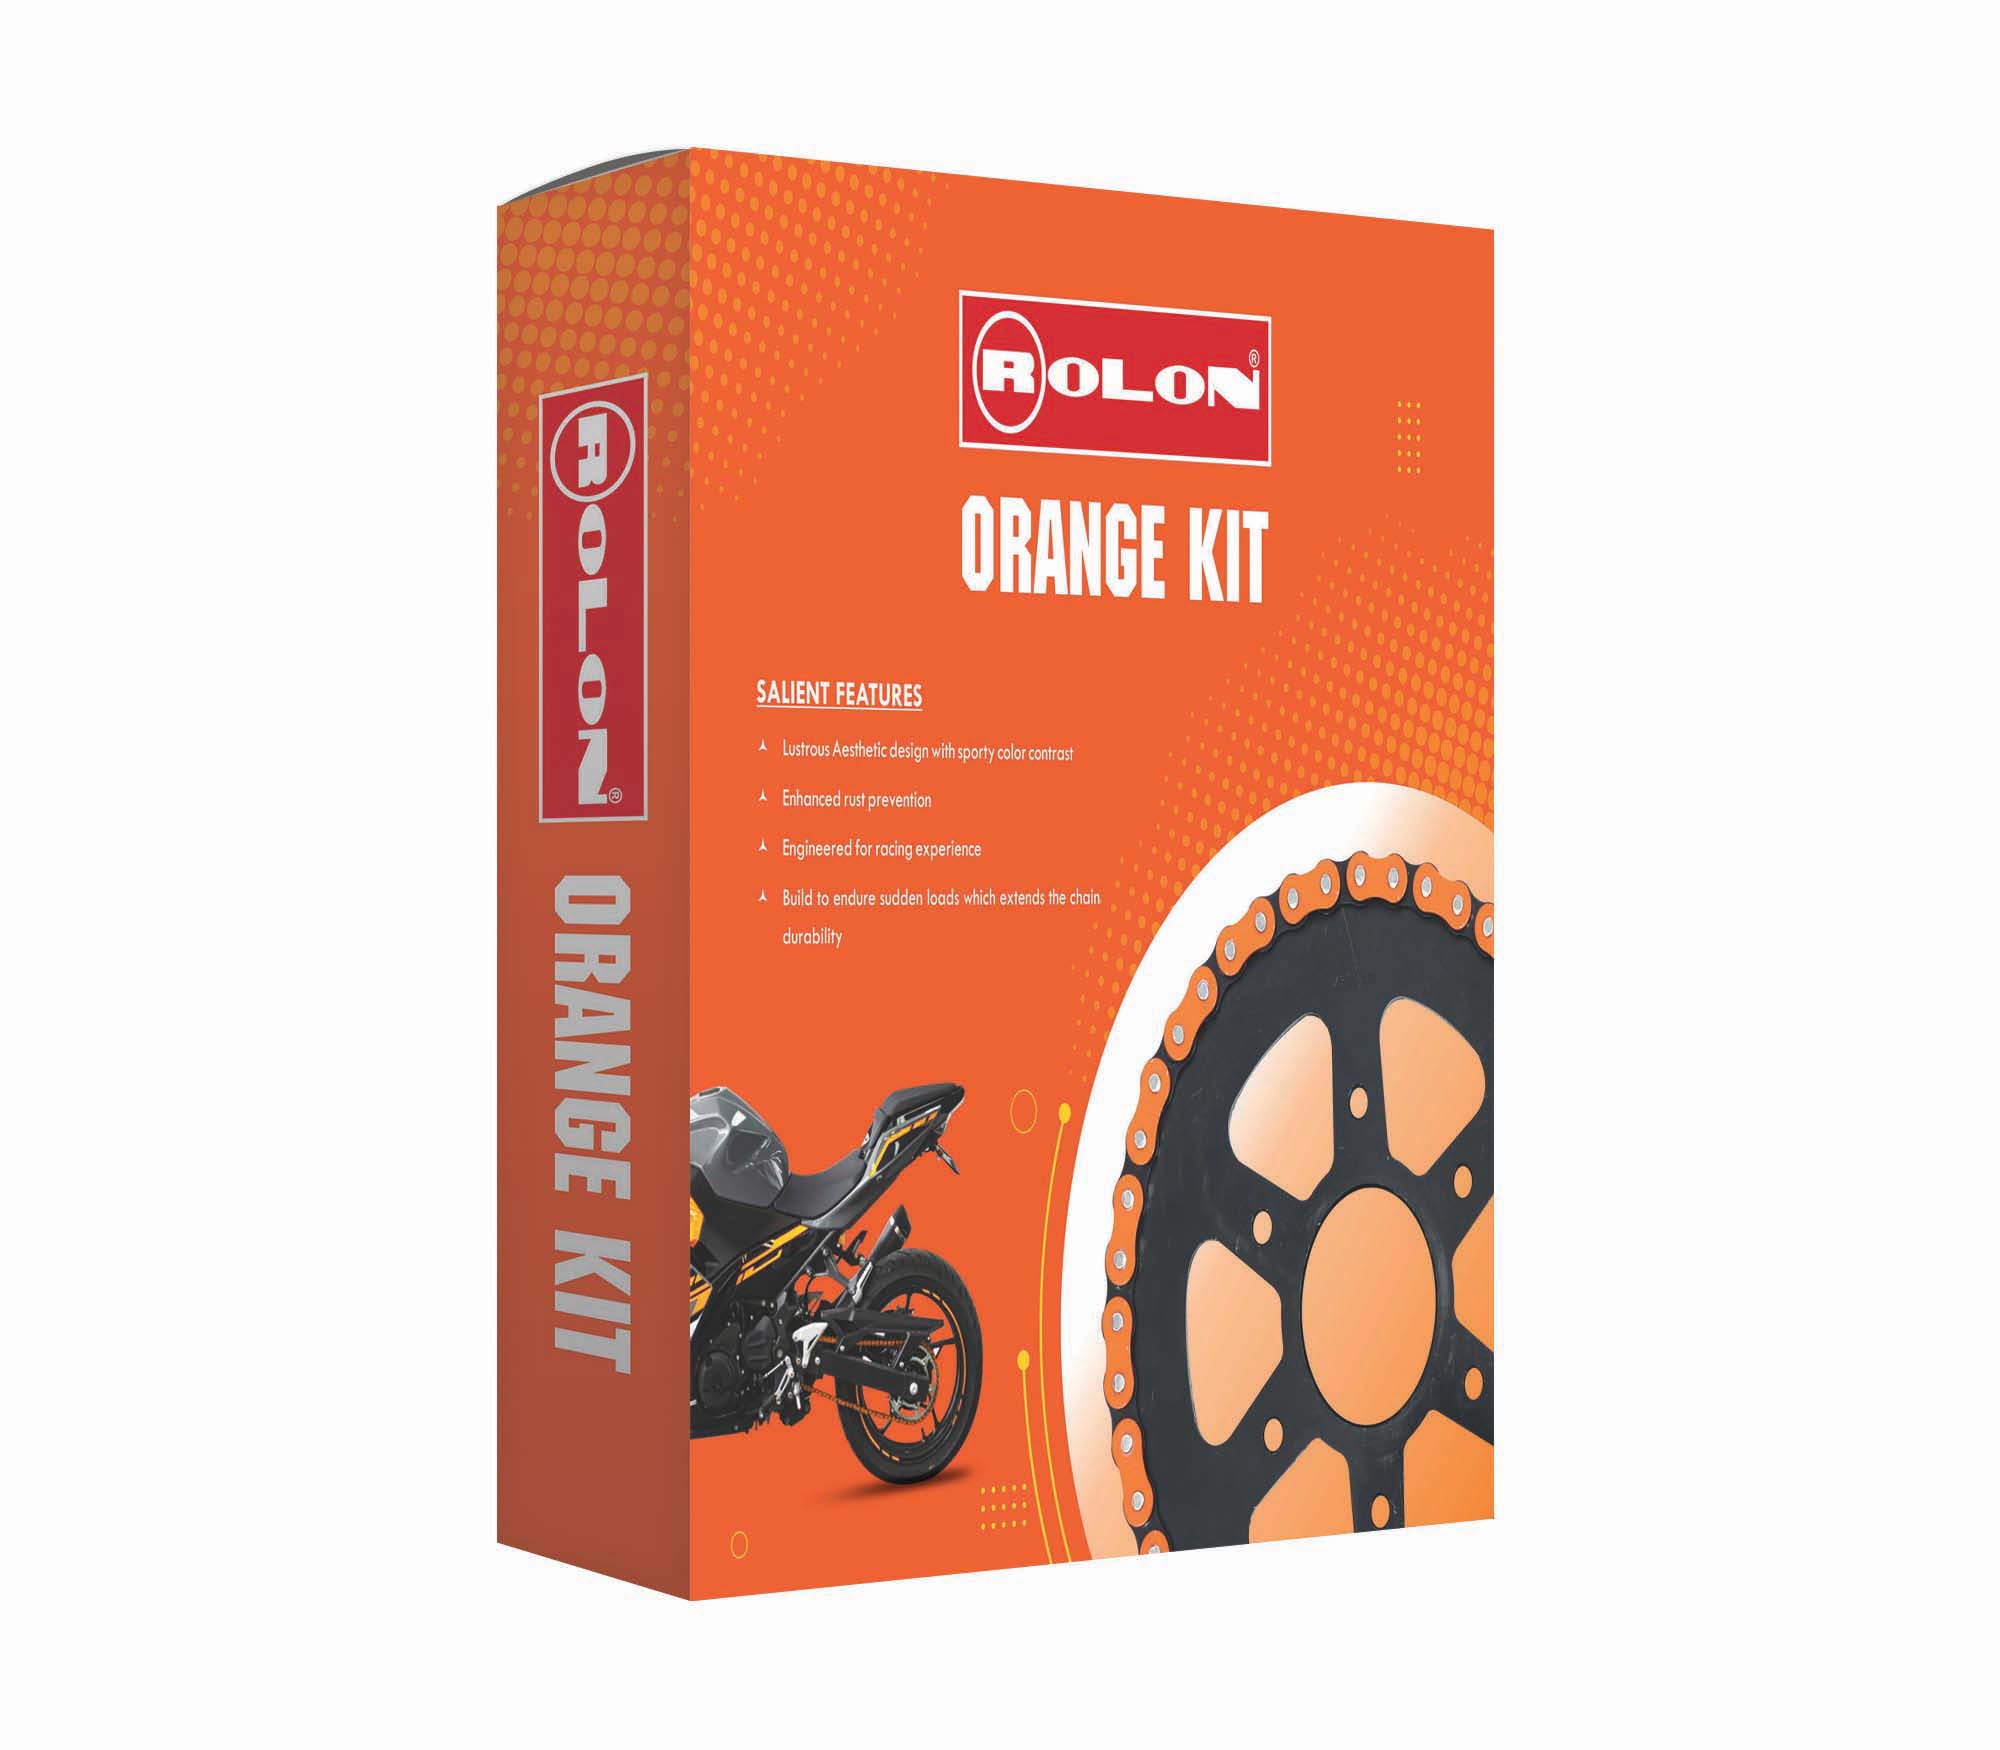 Orange Chain and Sprocket kit for PULSAR NS 200 NEW - KIT HPORO 376